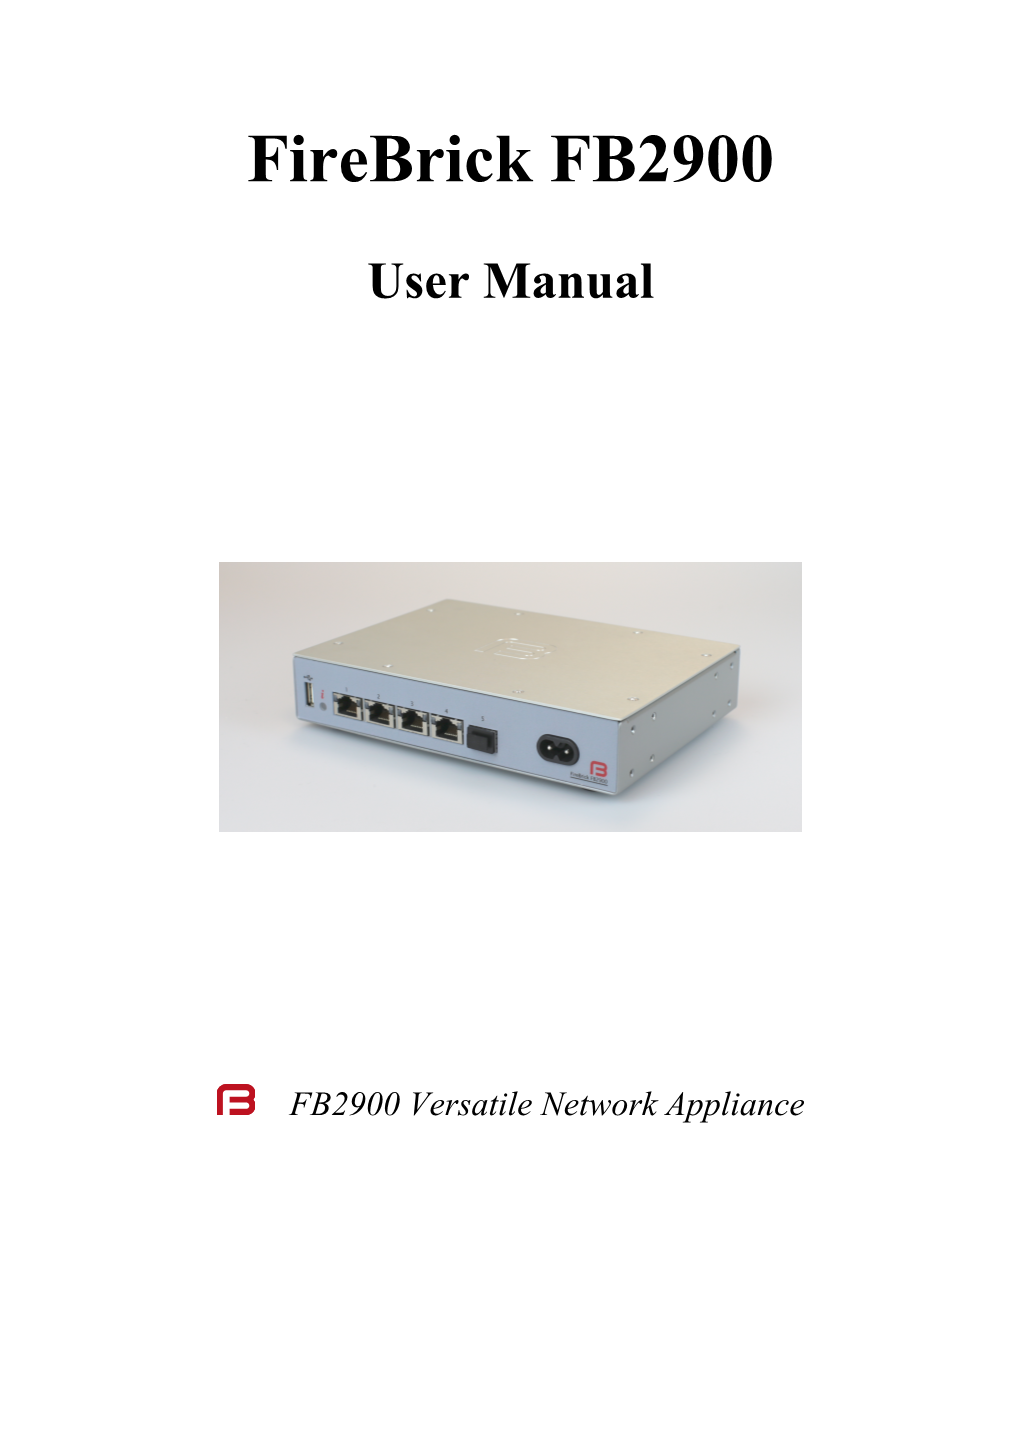 Firebrick FB2900 User Manual This User Manual Documents Software Version V1.47.010 Copyright © 2012-2018 Firebrick Ltd